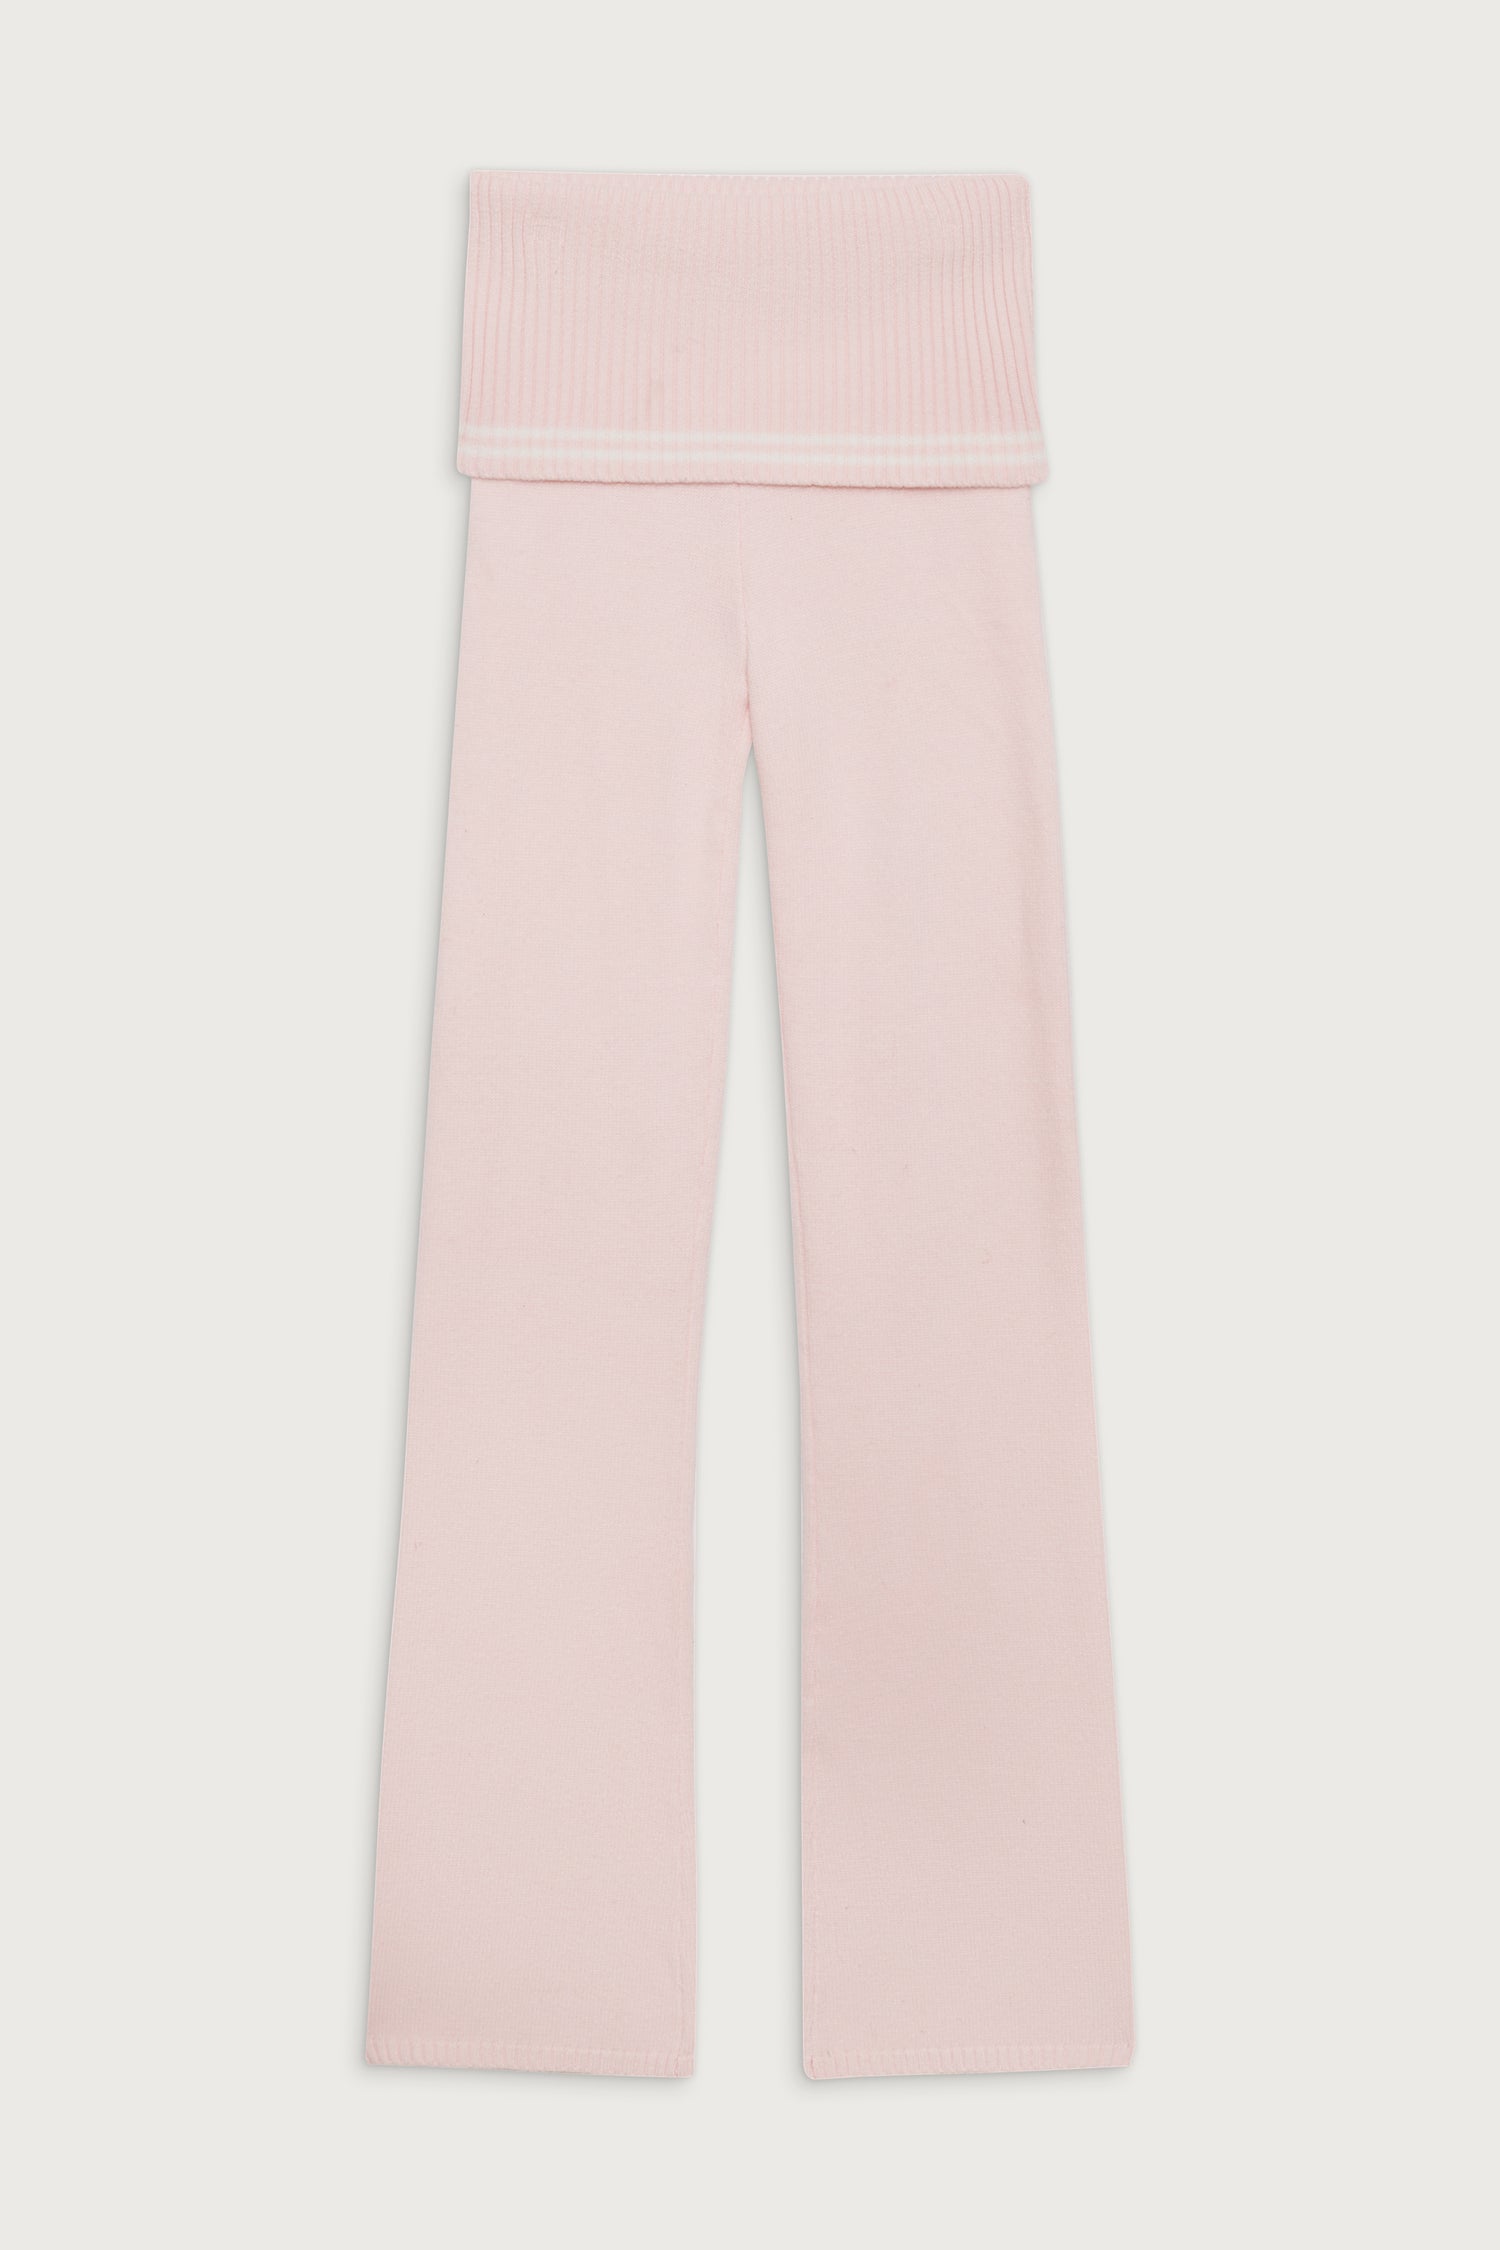 Aimee Cloud Knit Flare Pant - Rosebud Pink